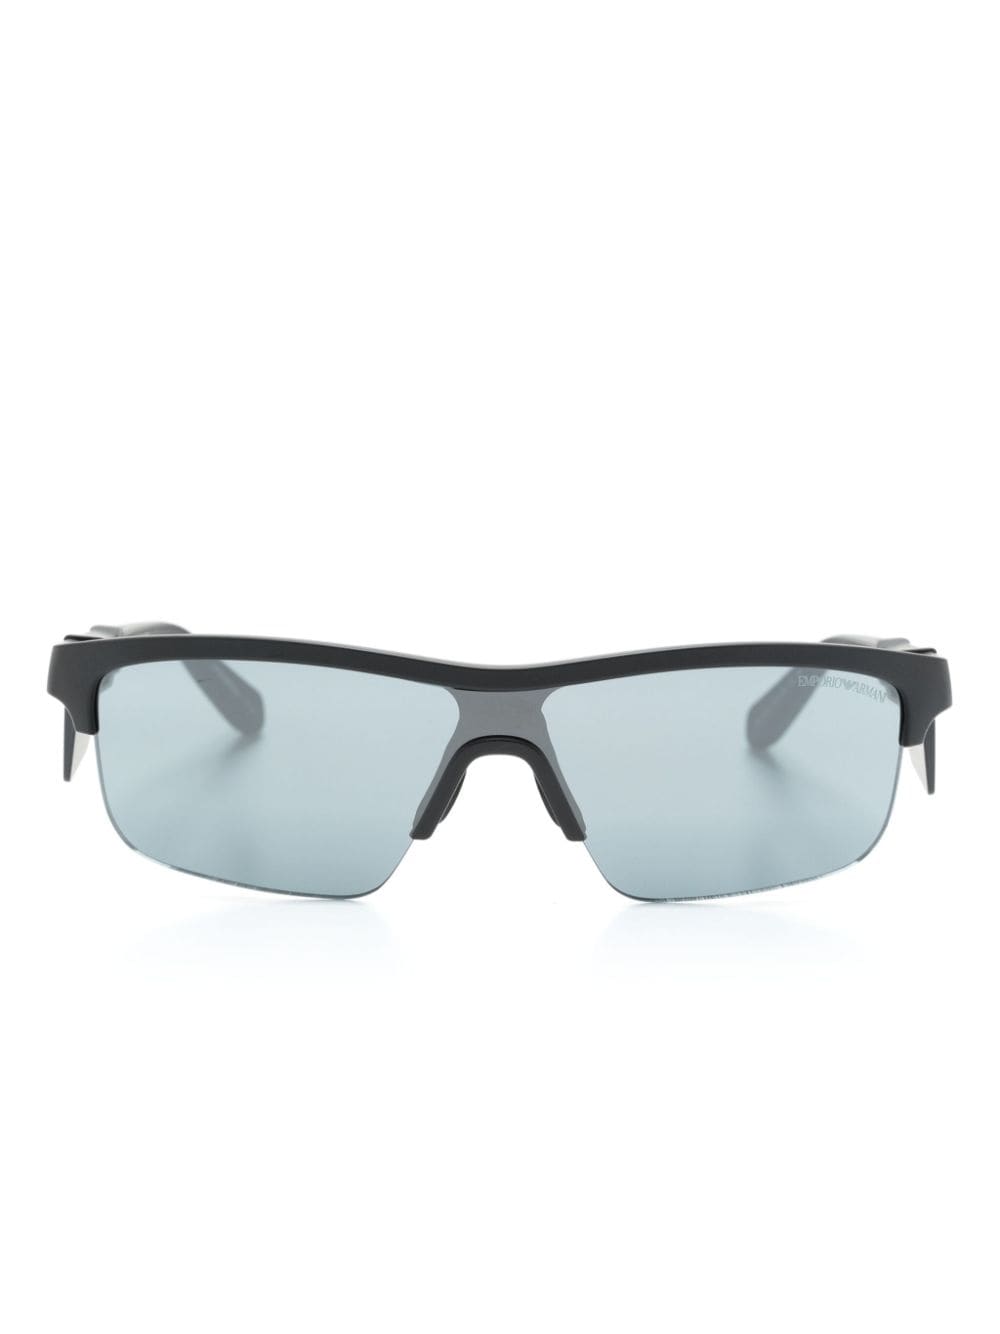 shield-frame sunglasses